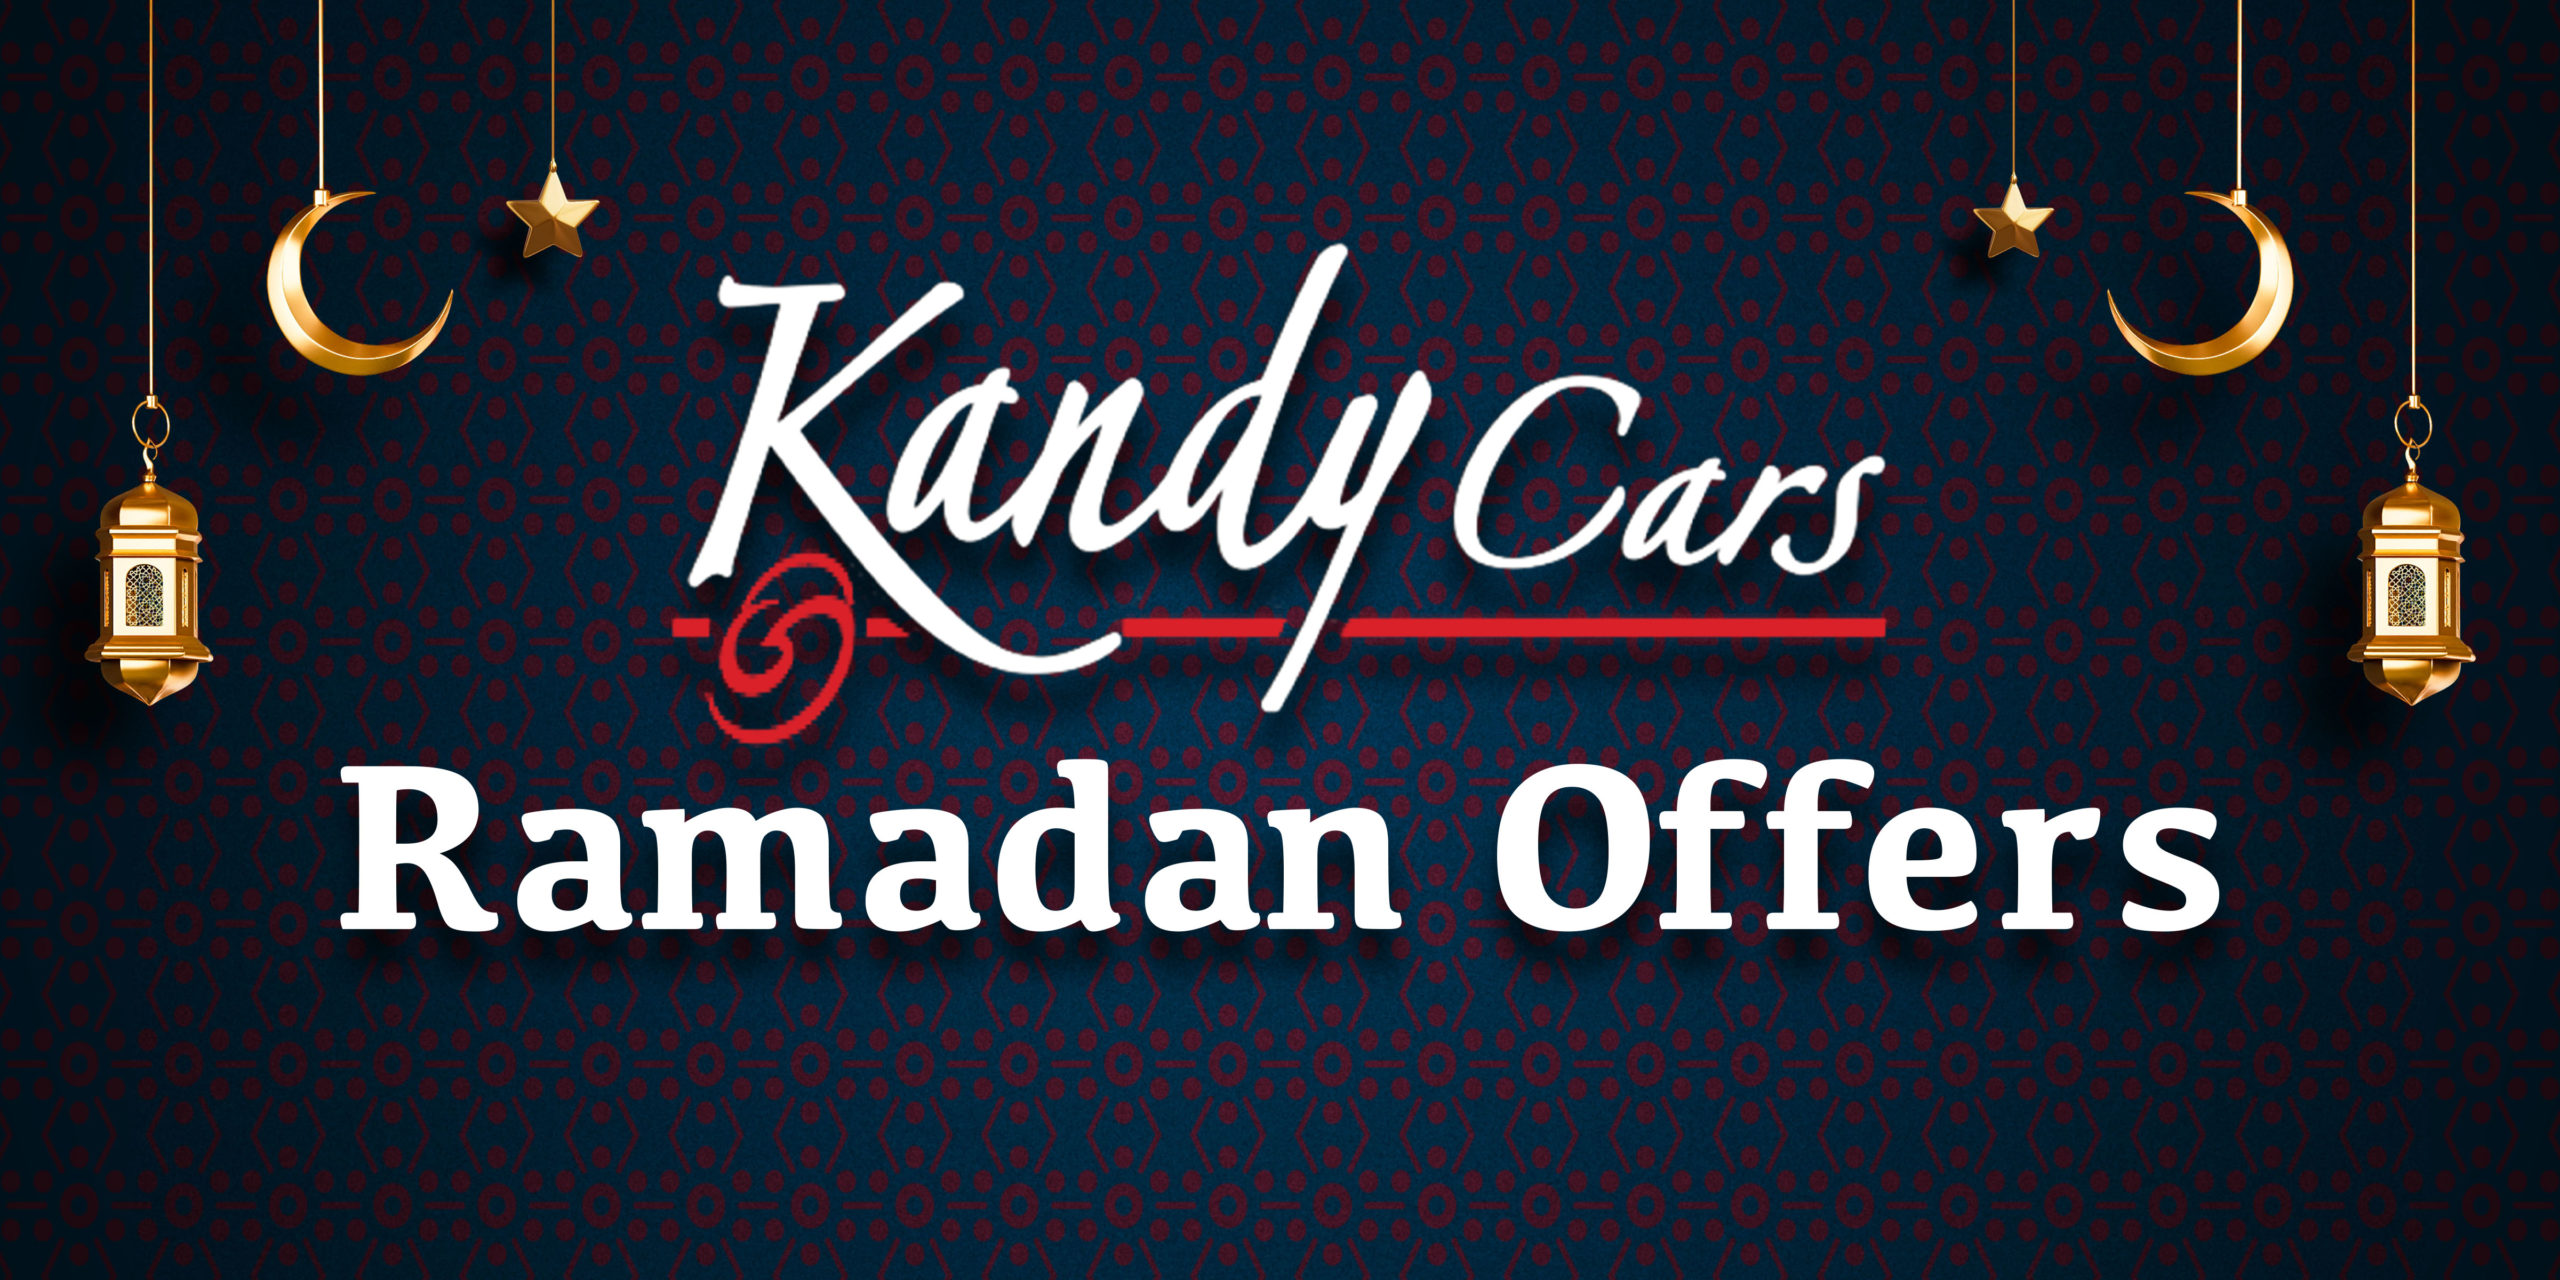 Kandy Cars Ramadan Offers